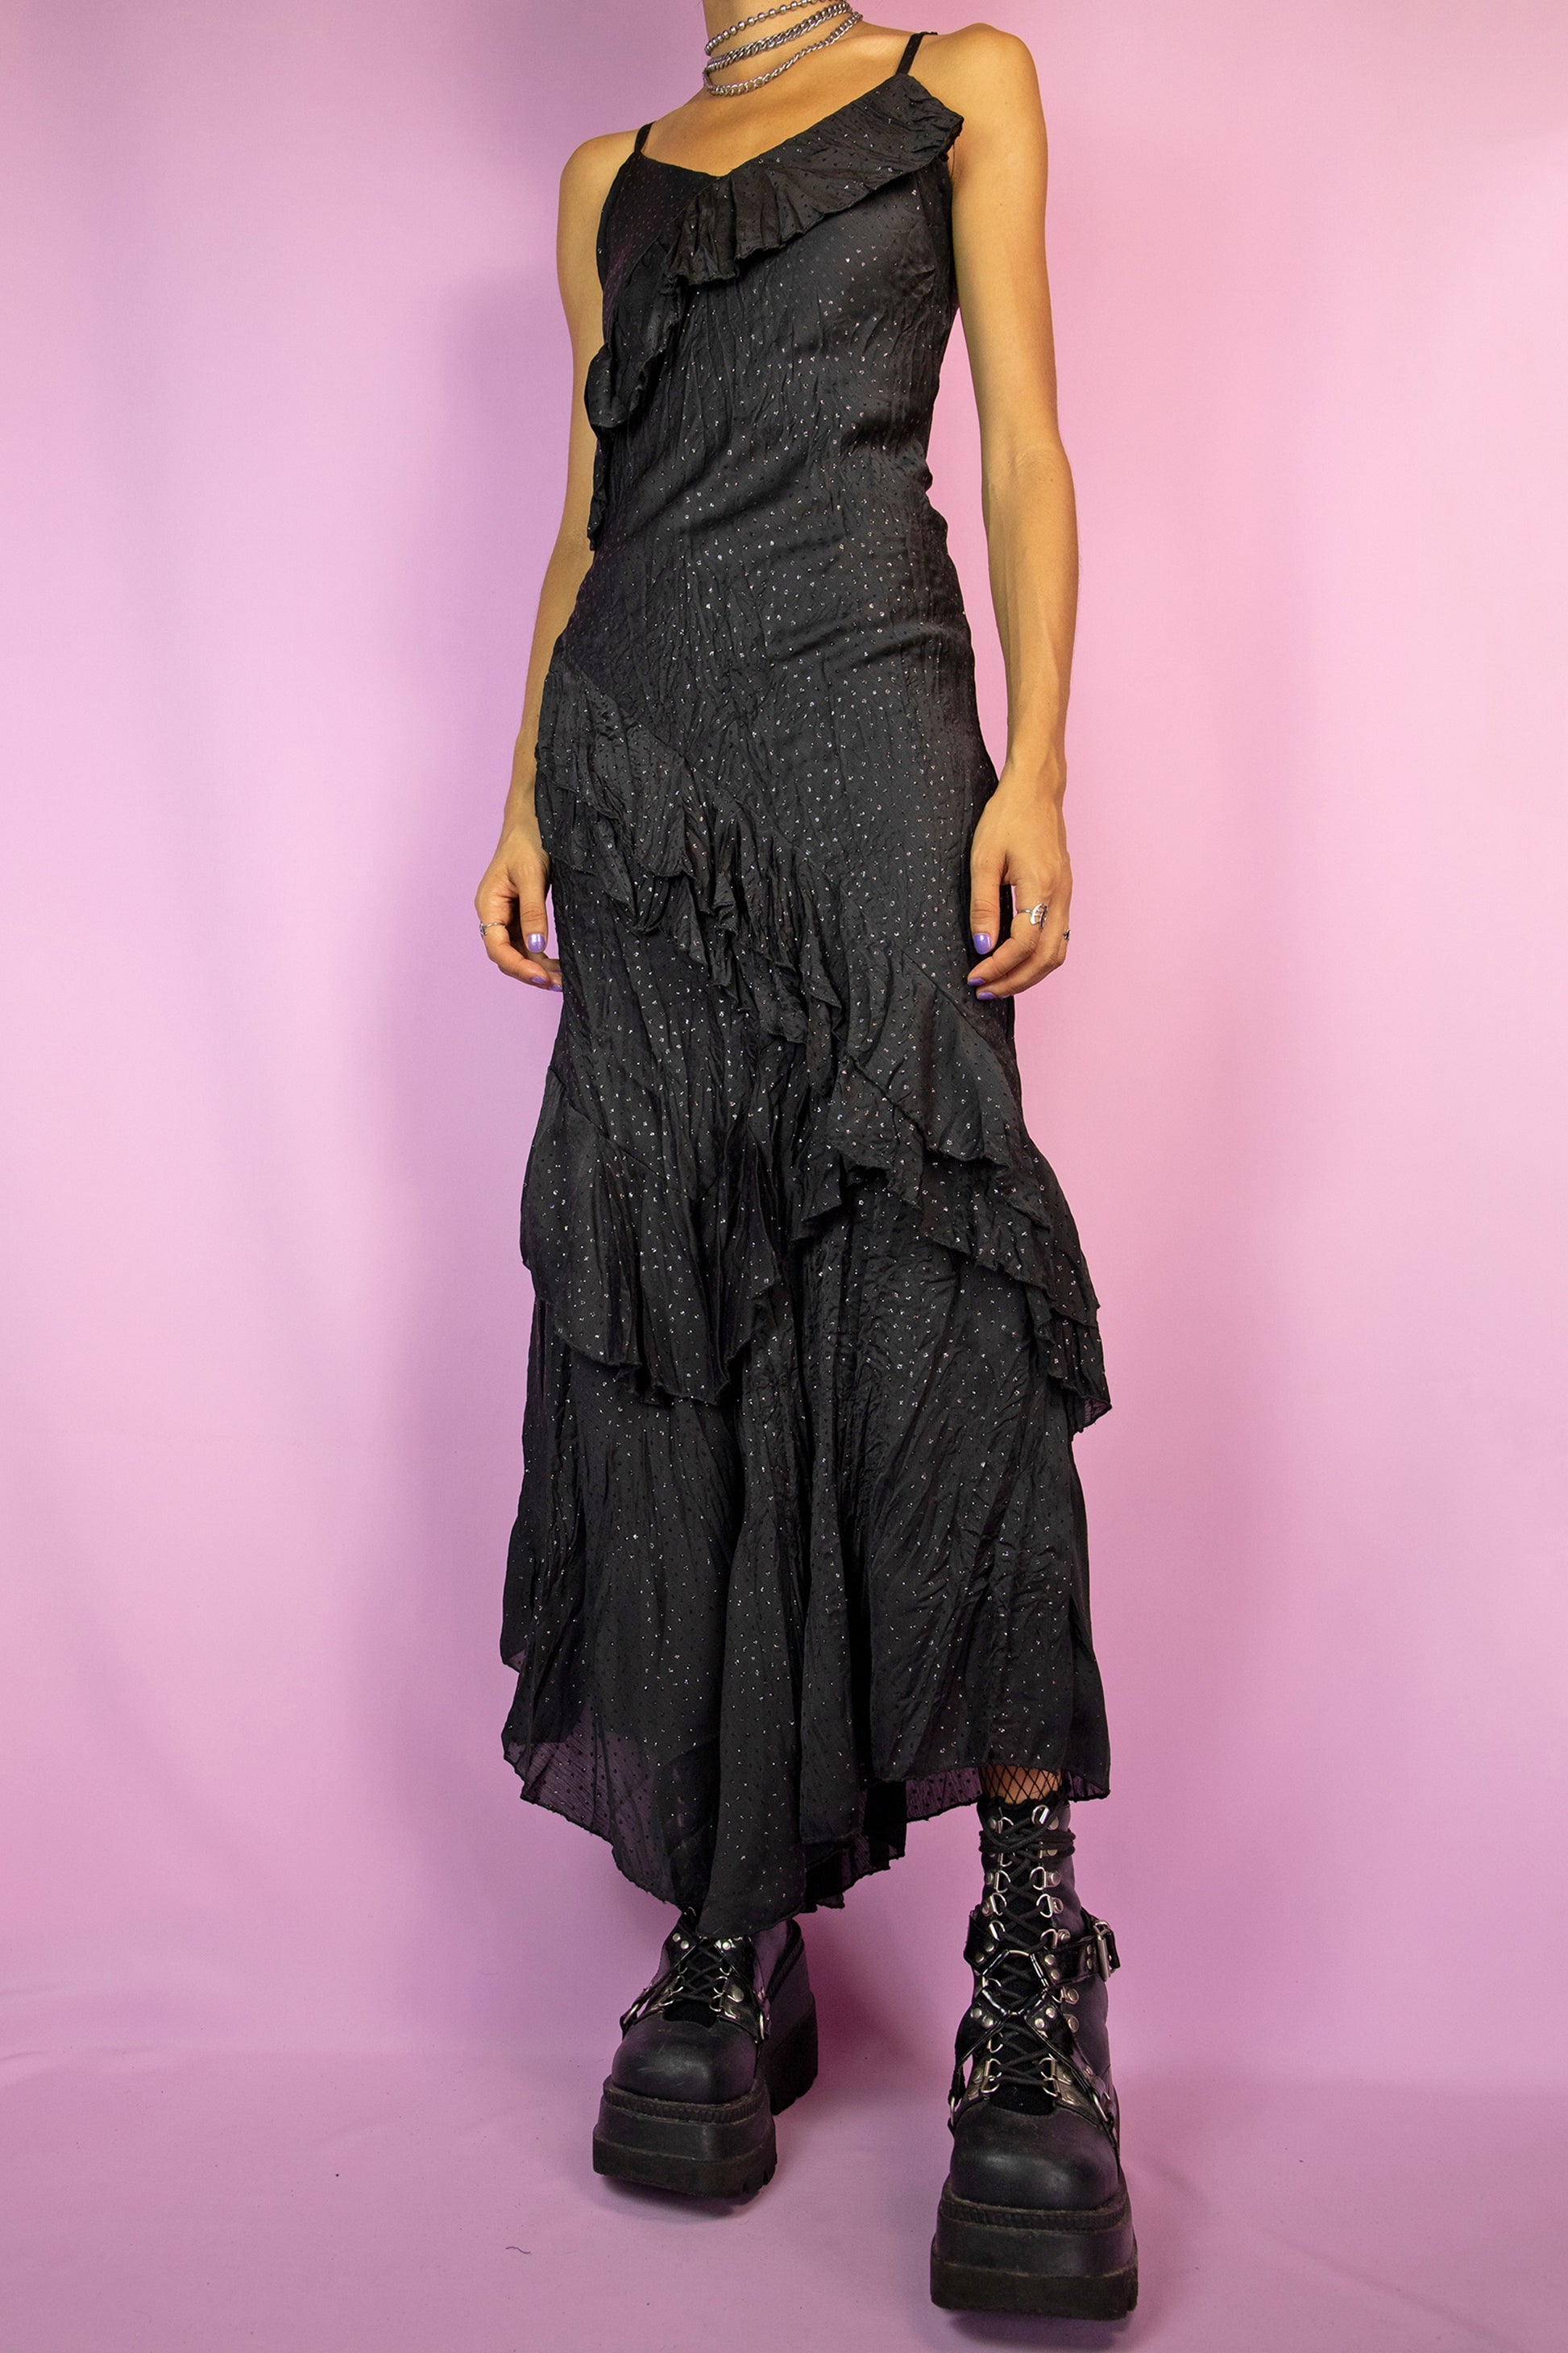 The Vintage 90s Black Ruffle Maxi Dress is a black dress with asymmetrical hem, glitter polka dots and ruffles. Elegant 1990s party midi dress.